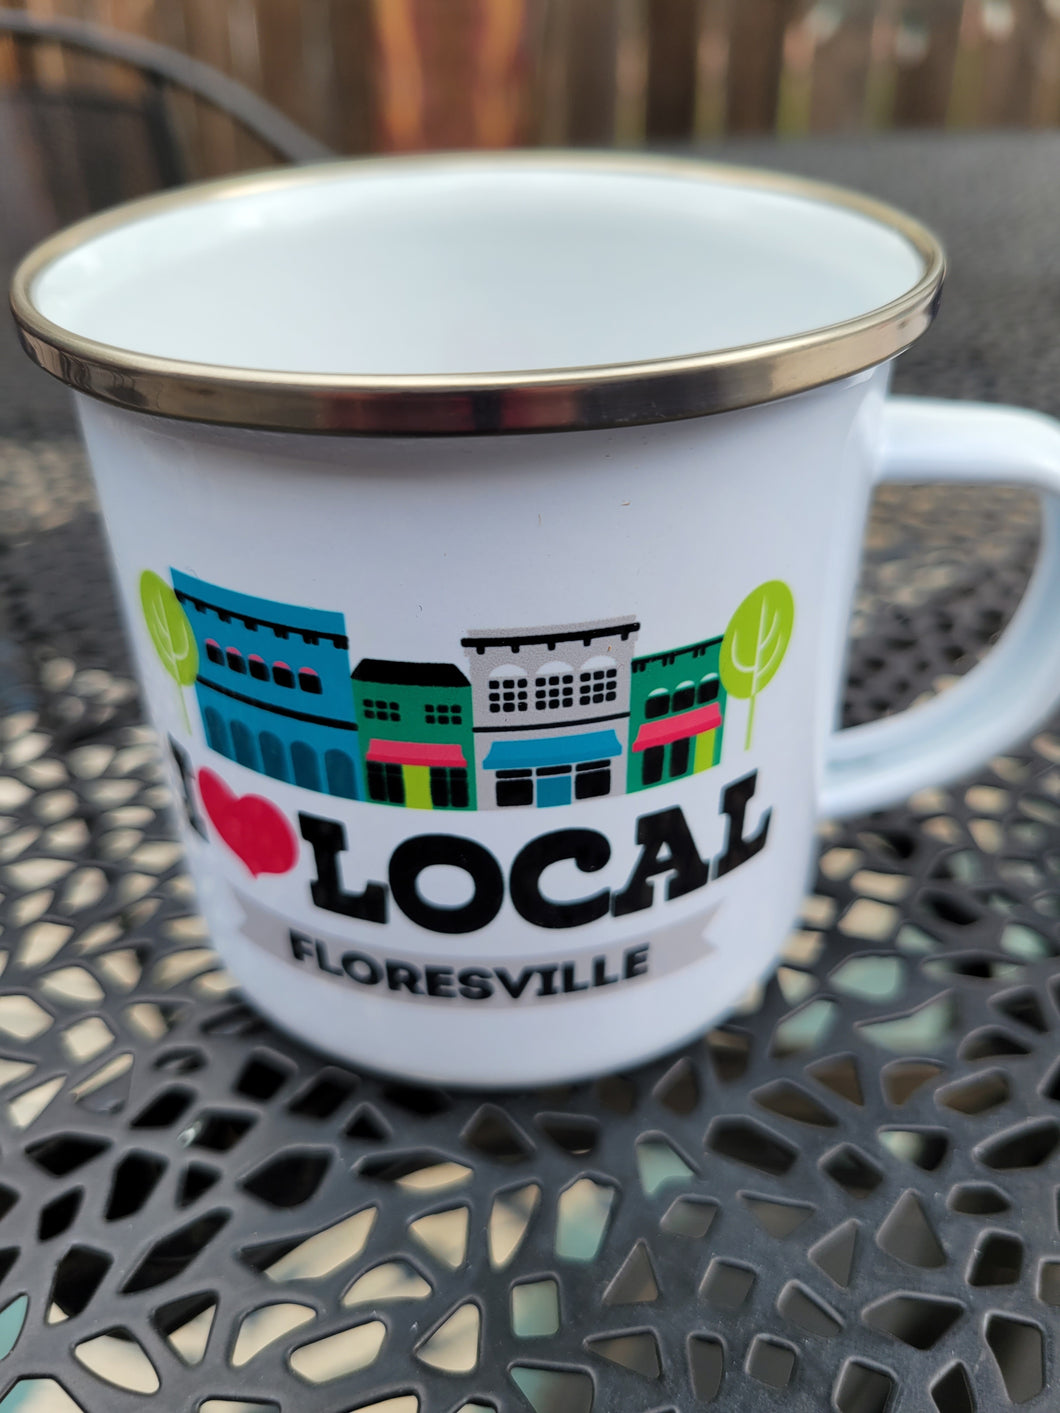 I ♥️ Local Floresville